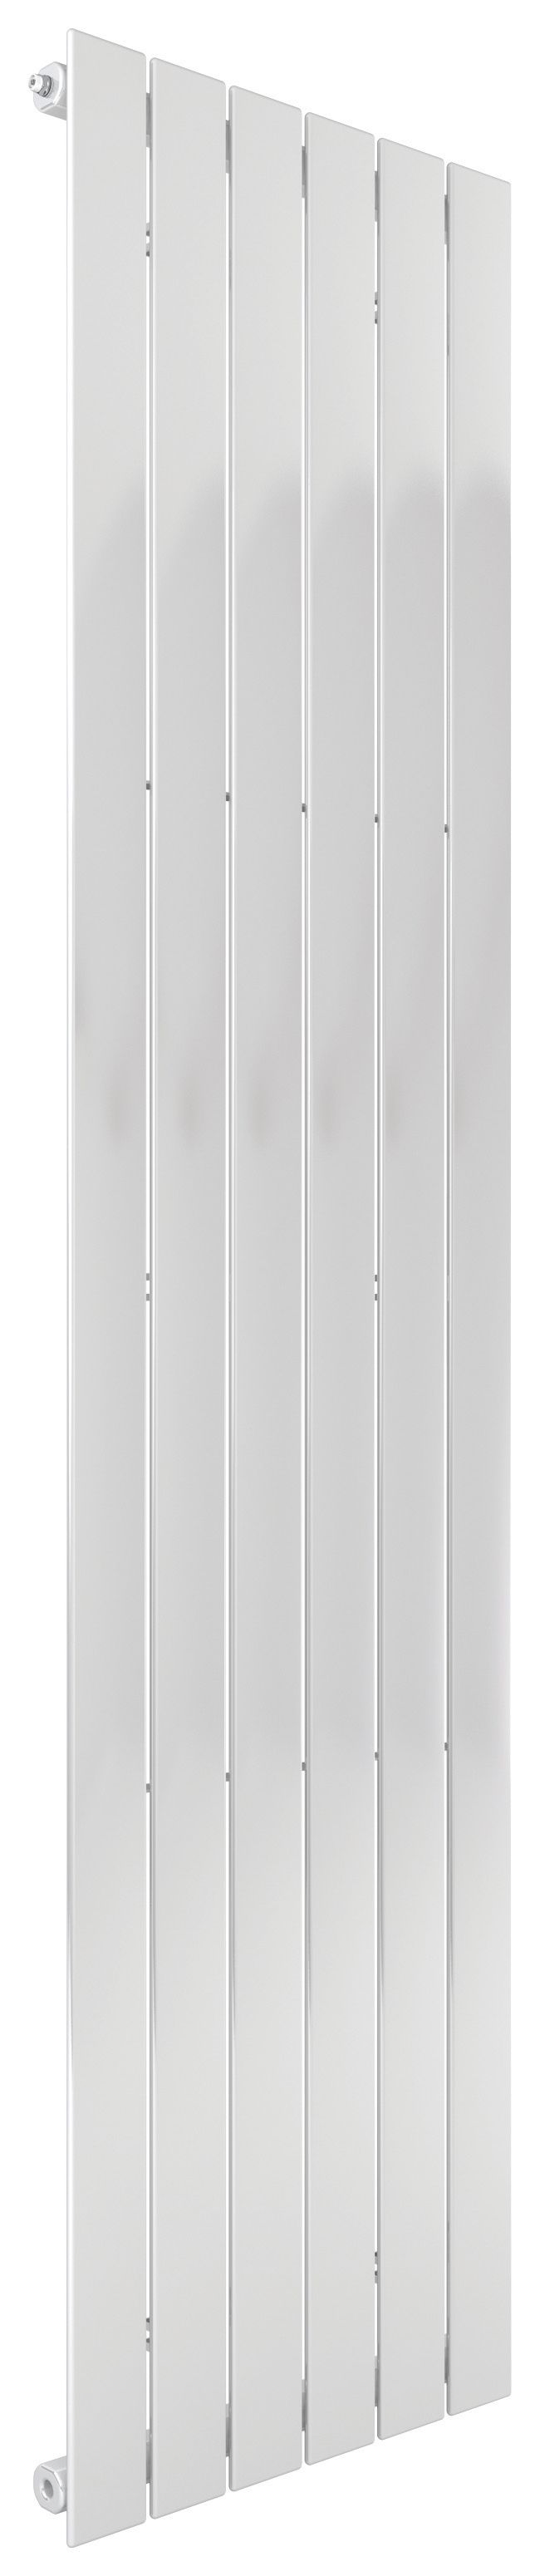 Image of Henrad Verona Vertical Designer Radiator - White 2000 x 736 mm